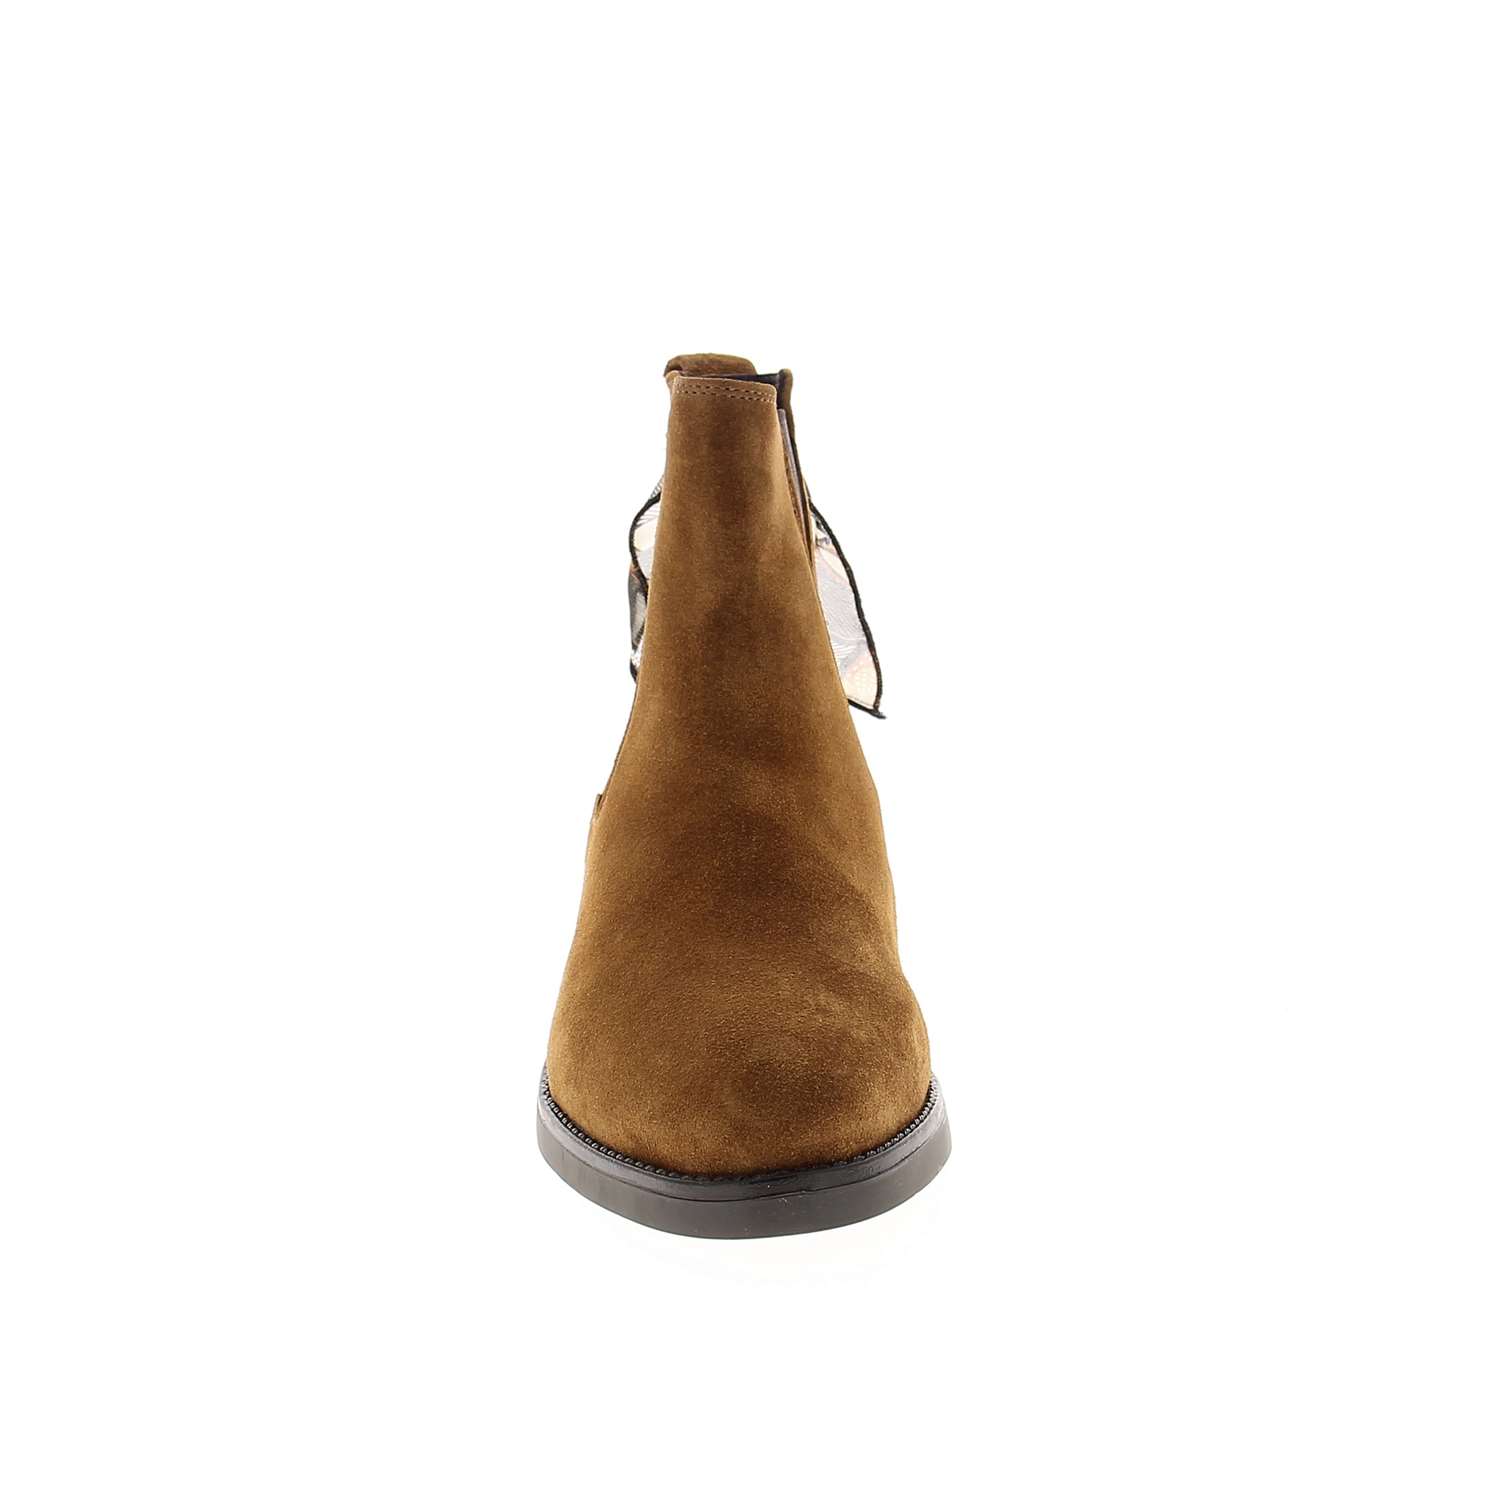 03 - GOMMY - GOODSTEP - Boots et bottines - Croûte de cuir